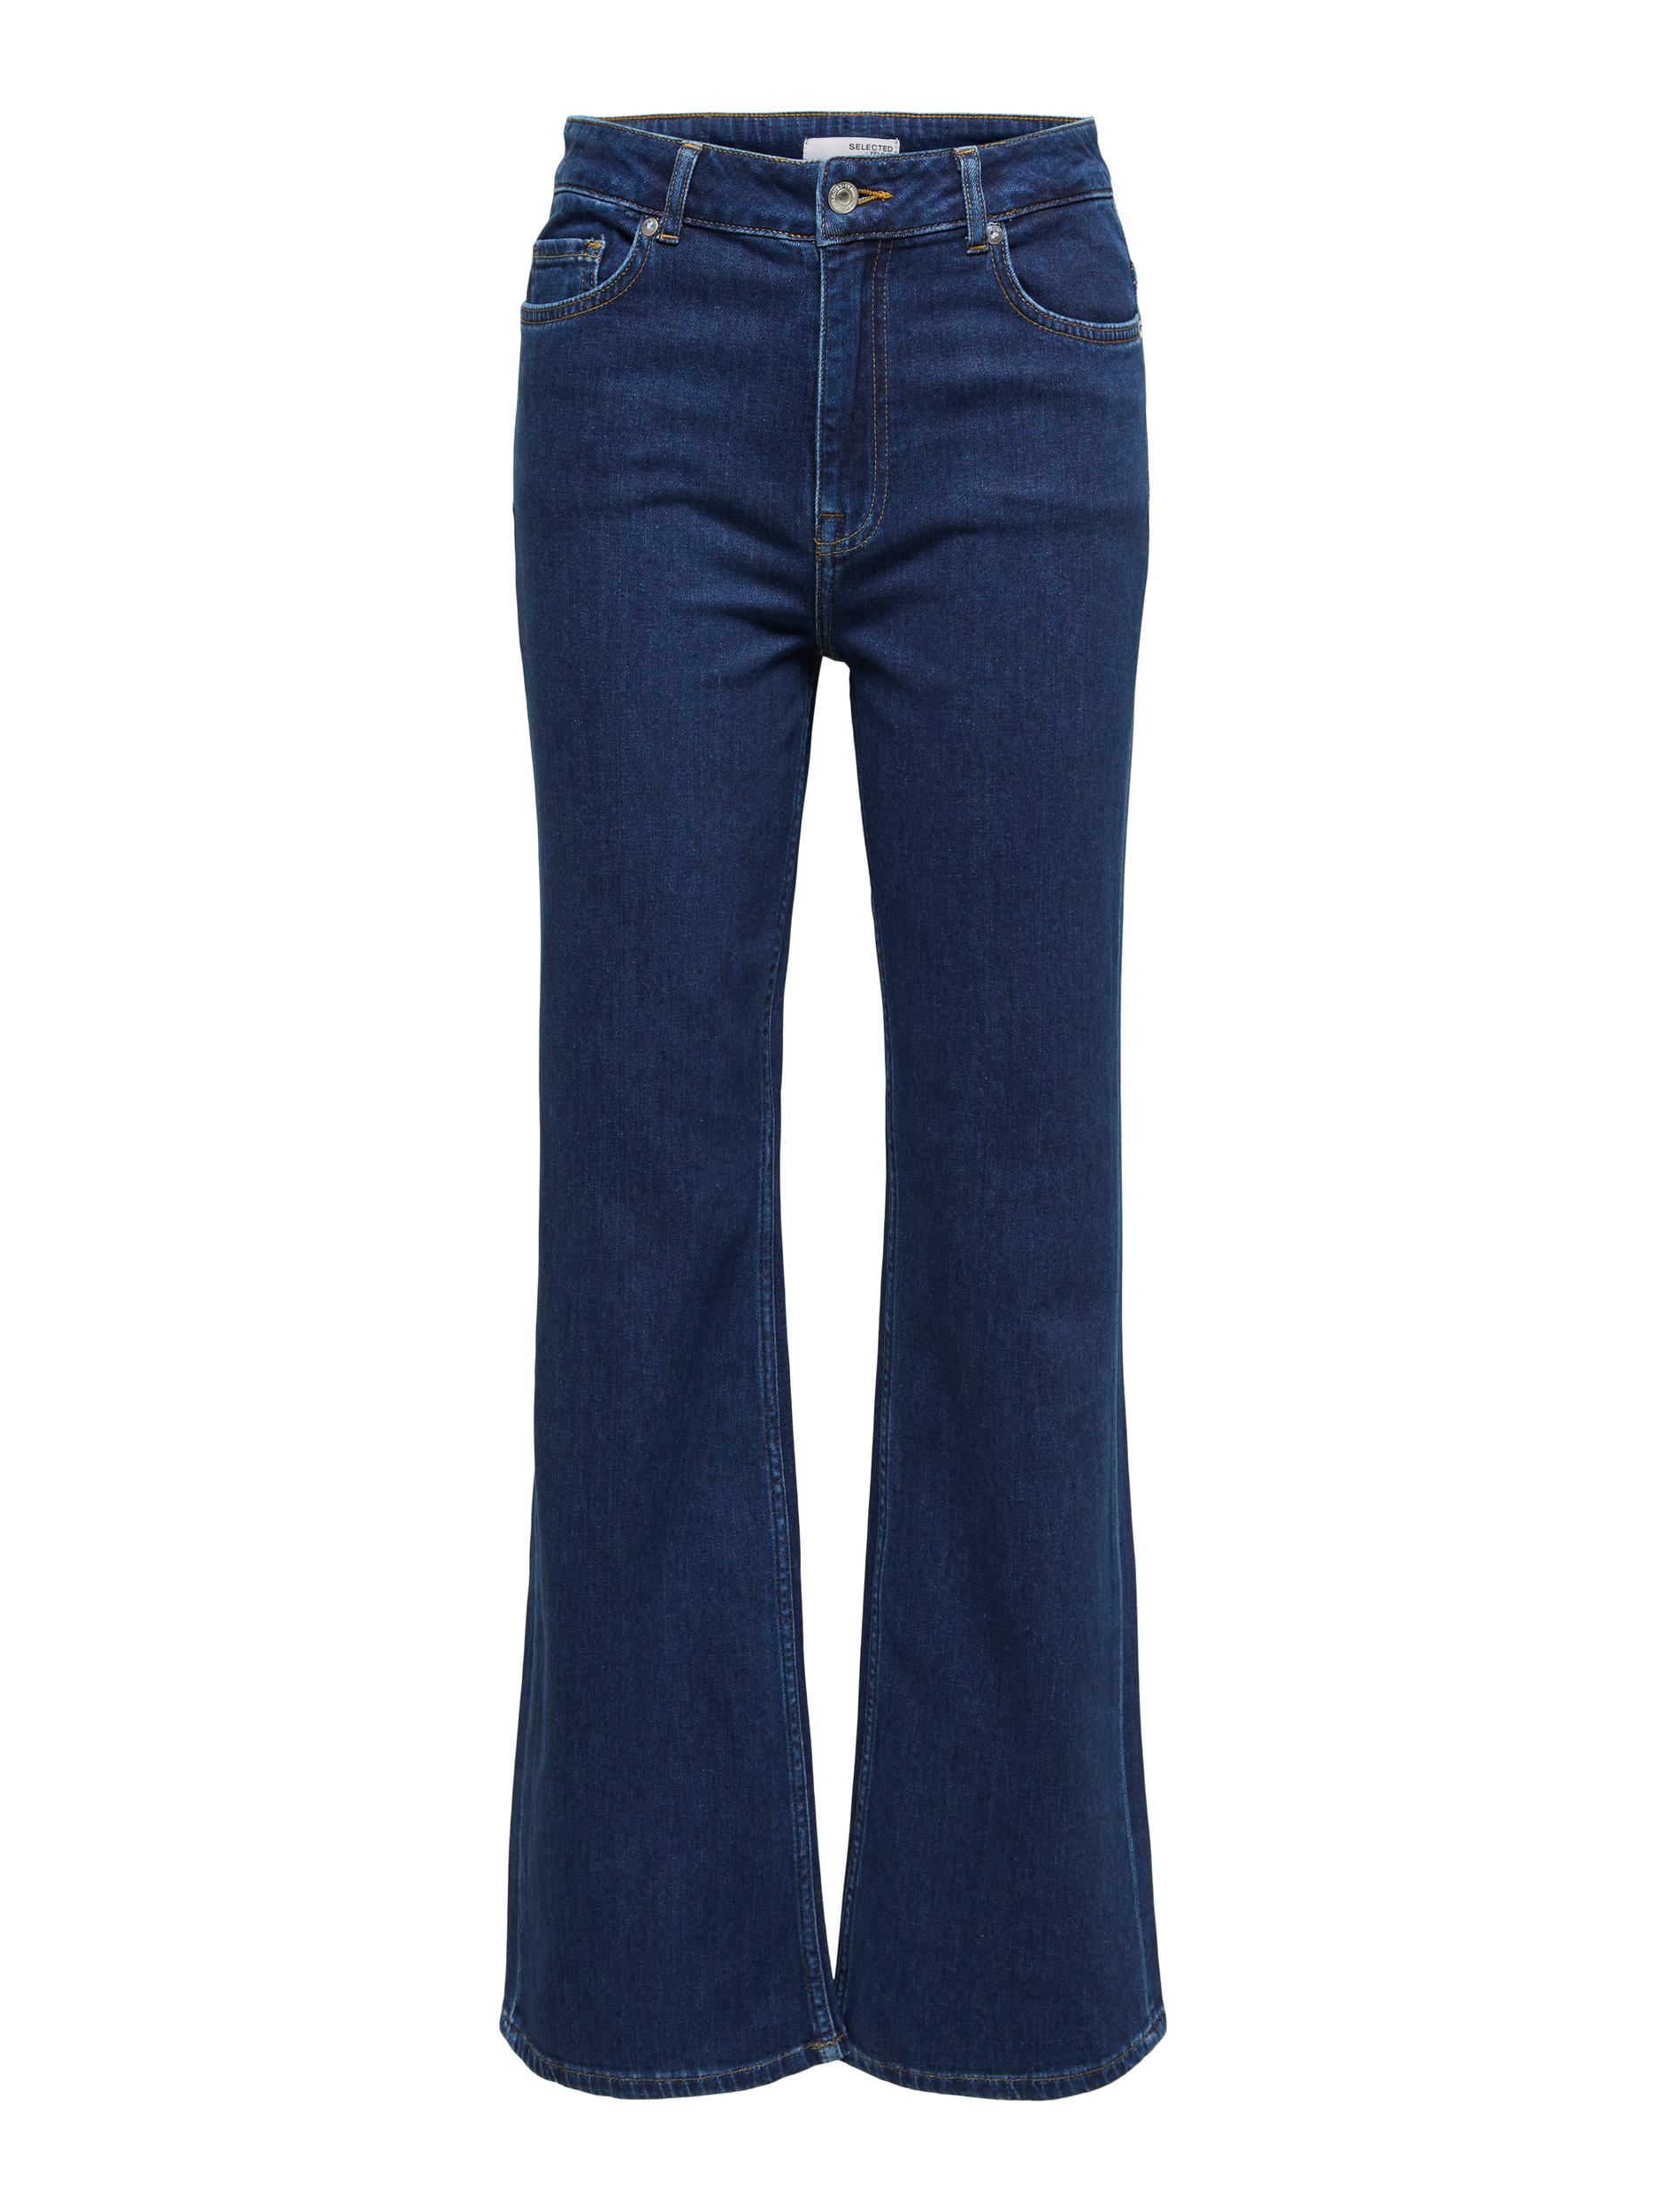 Selected Femme Brigitte HW Bootcut Cut Jeans - Dark Blue Denim 